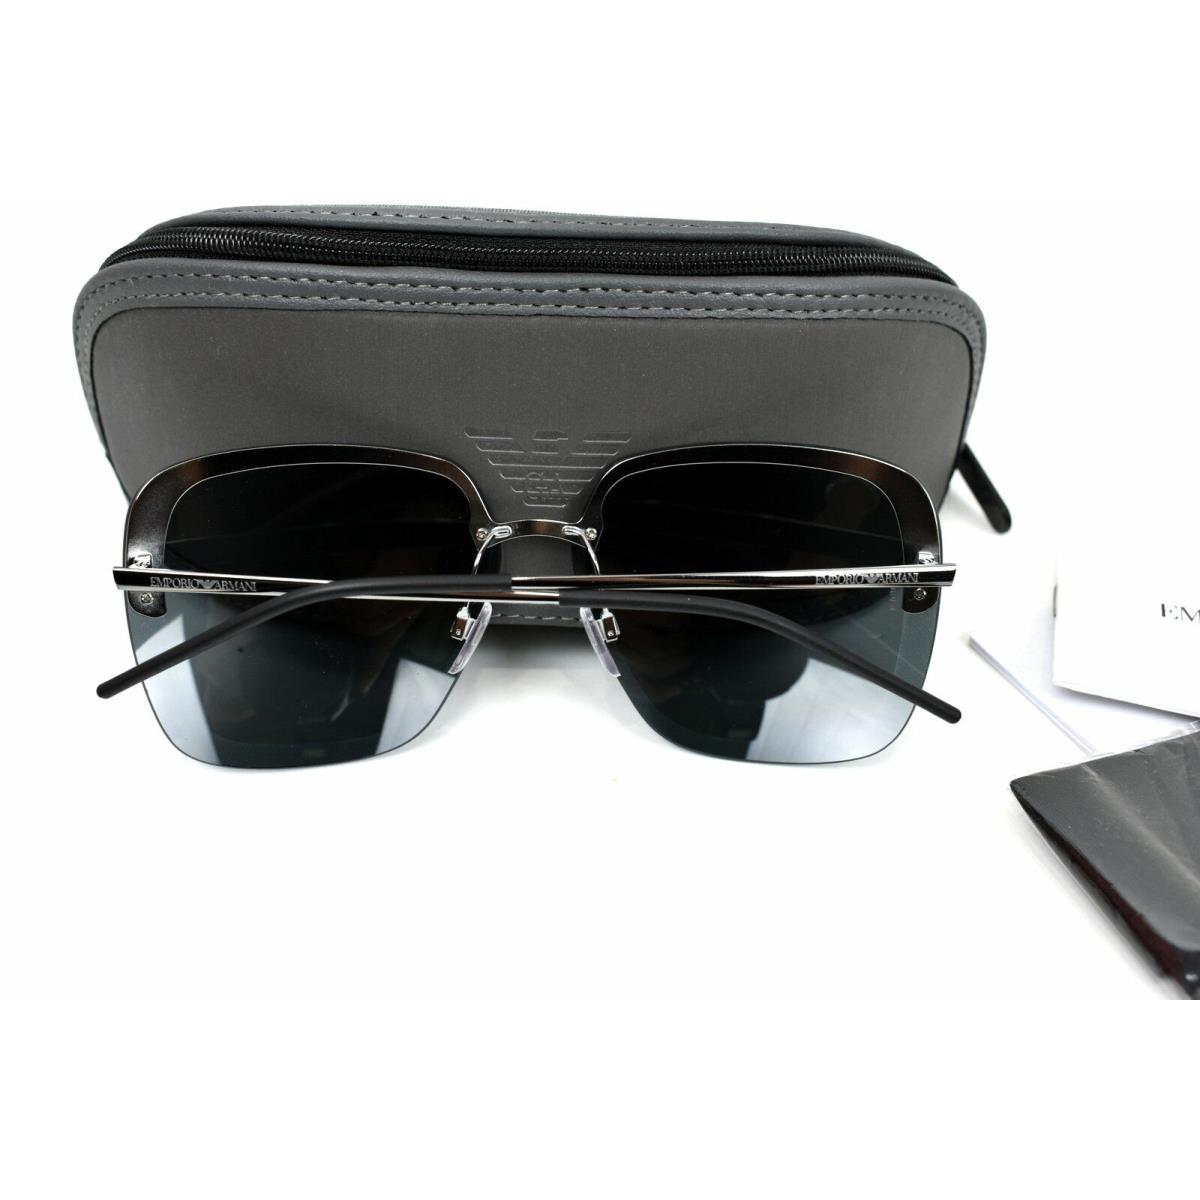 Emporio Armani sunglasses  - Frame: Gunmetal Black, Lens: Mirror Black